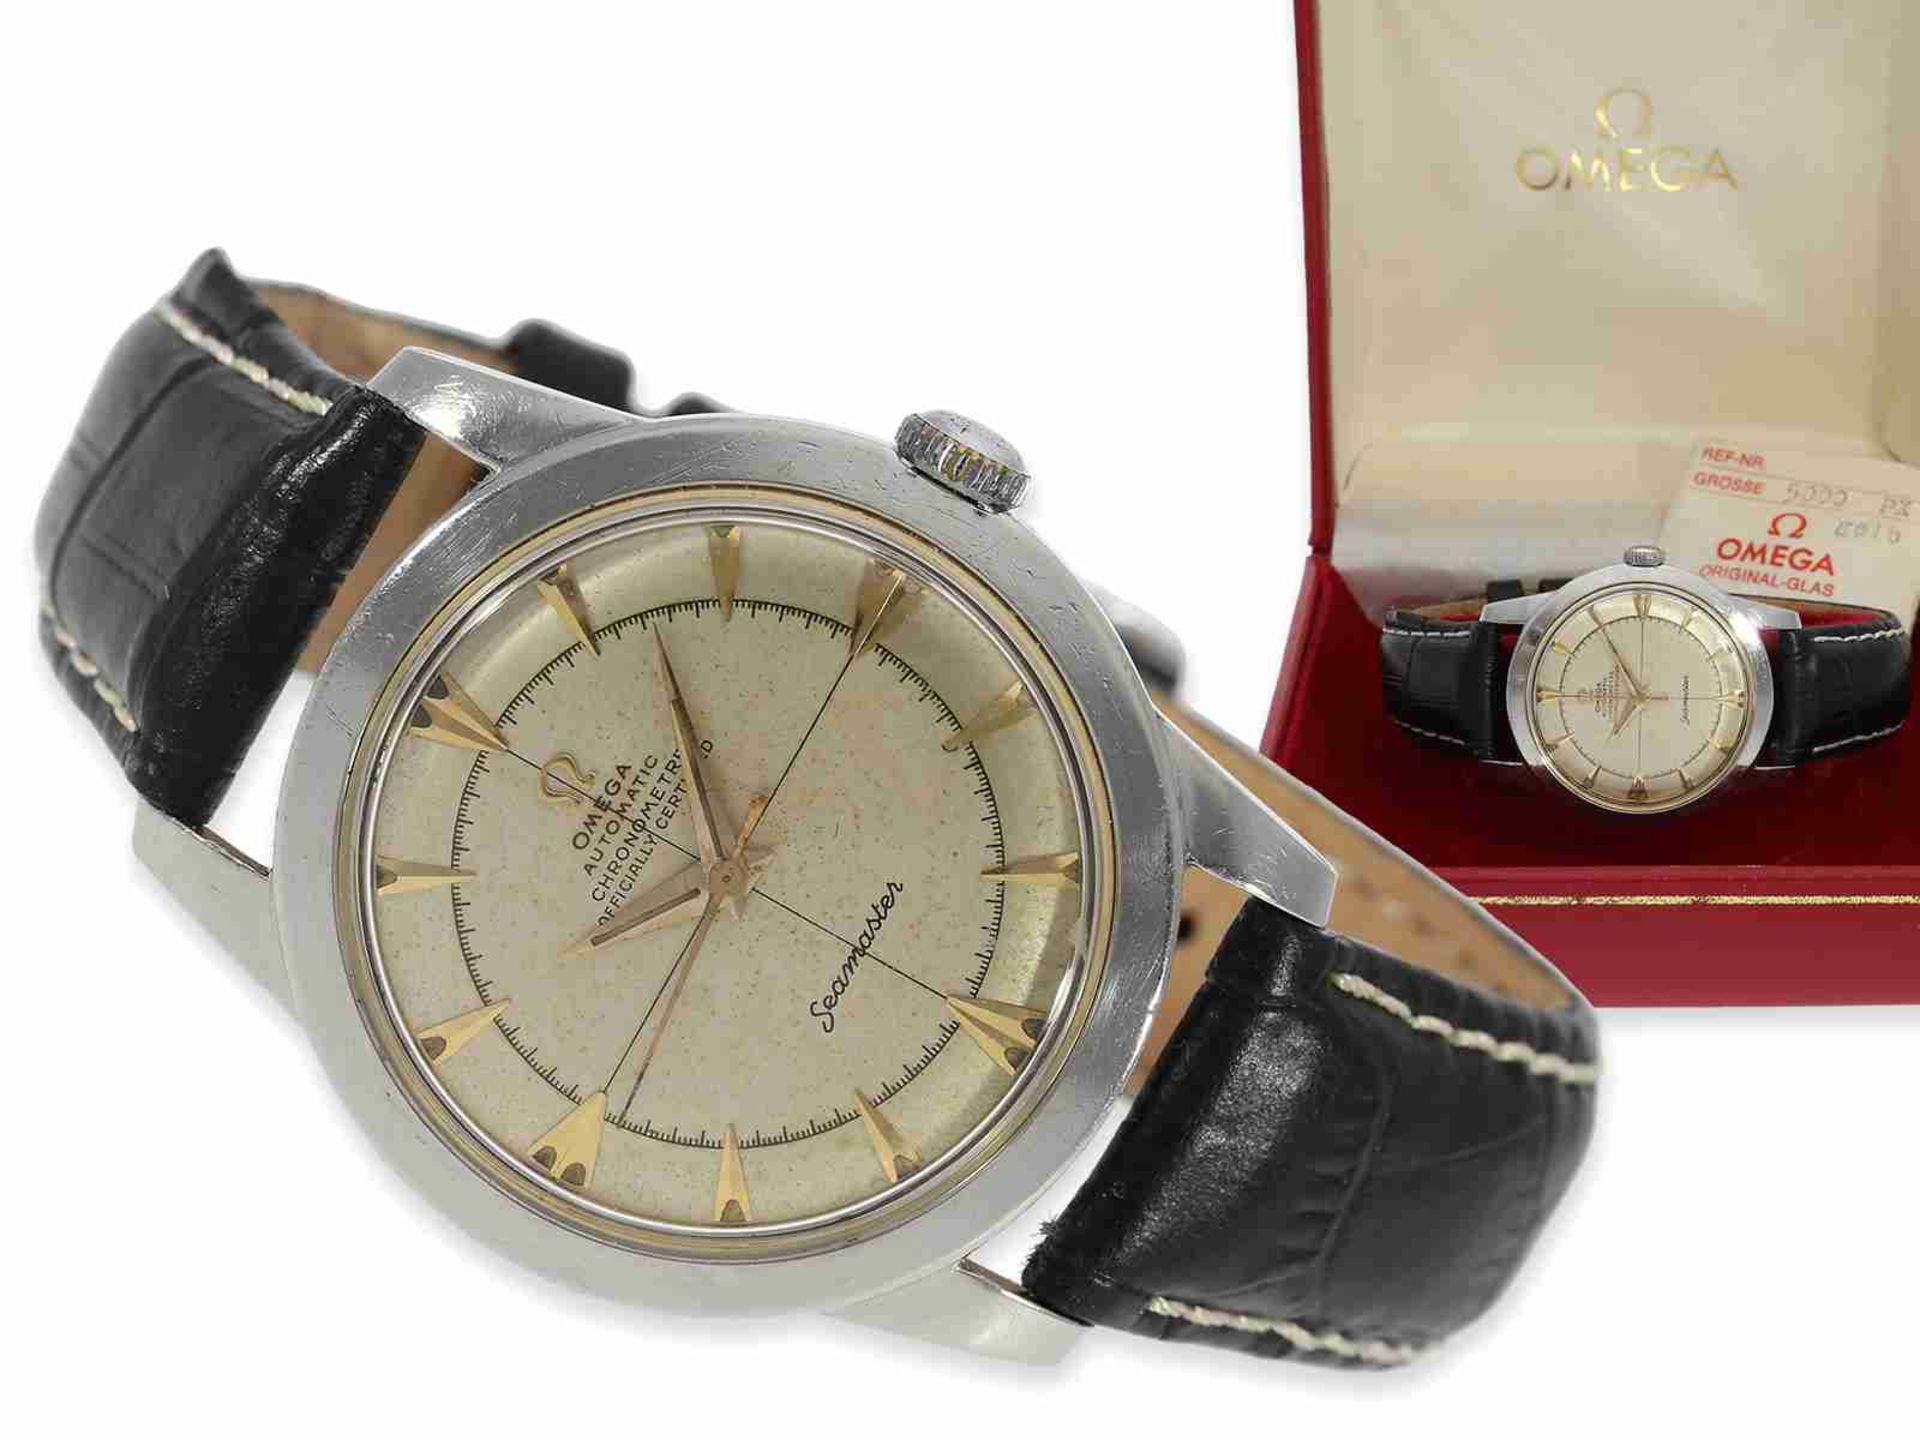 Armbanduhr: frühes, sehr seltenes Omega Automatikchronometer mit Sector-Zifferblatt, originales Chro